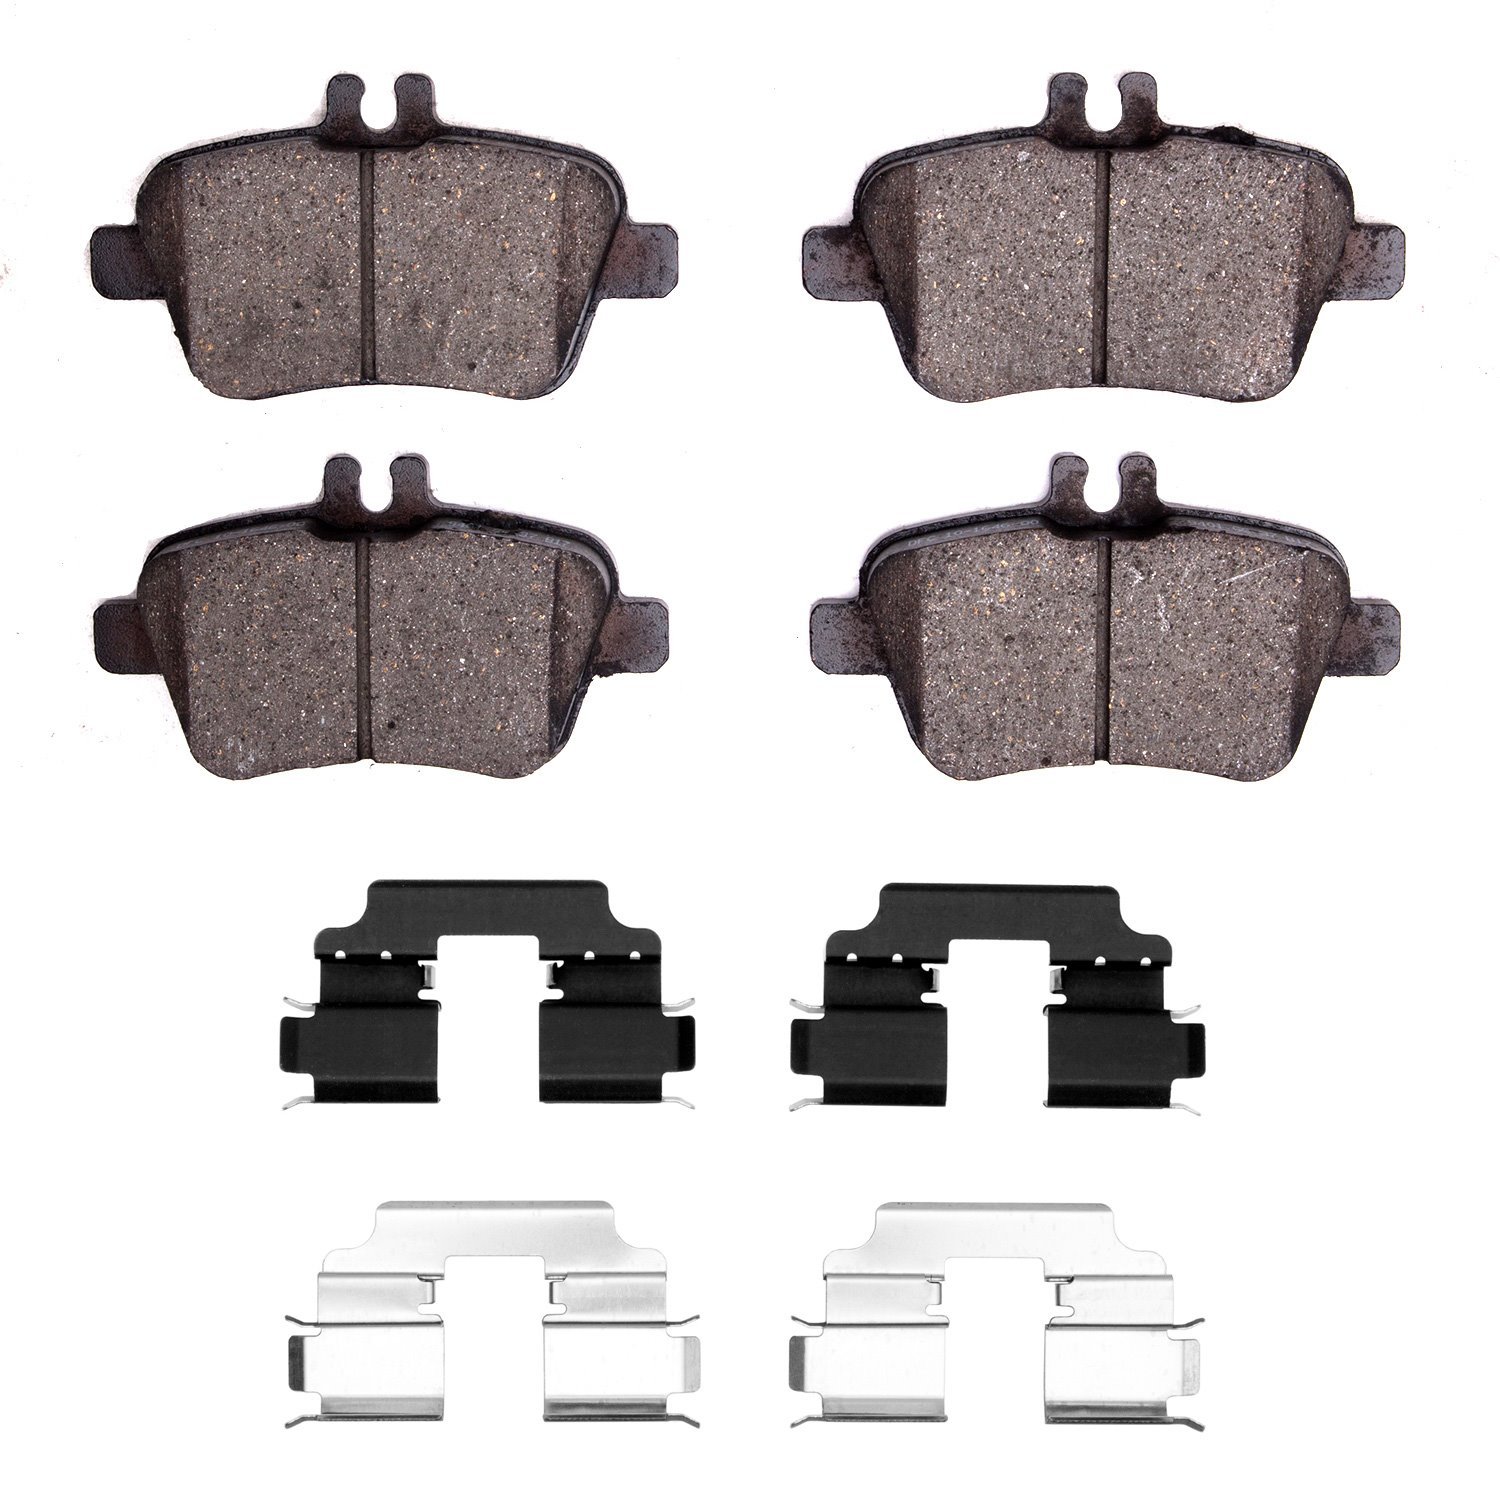 1310-1646-01 3000-Series Ceramic Brake Pads & Hardware Kit, 2012-2020 Multiple Makes/Models, Position: Rear